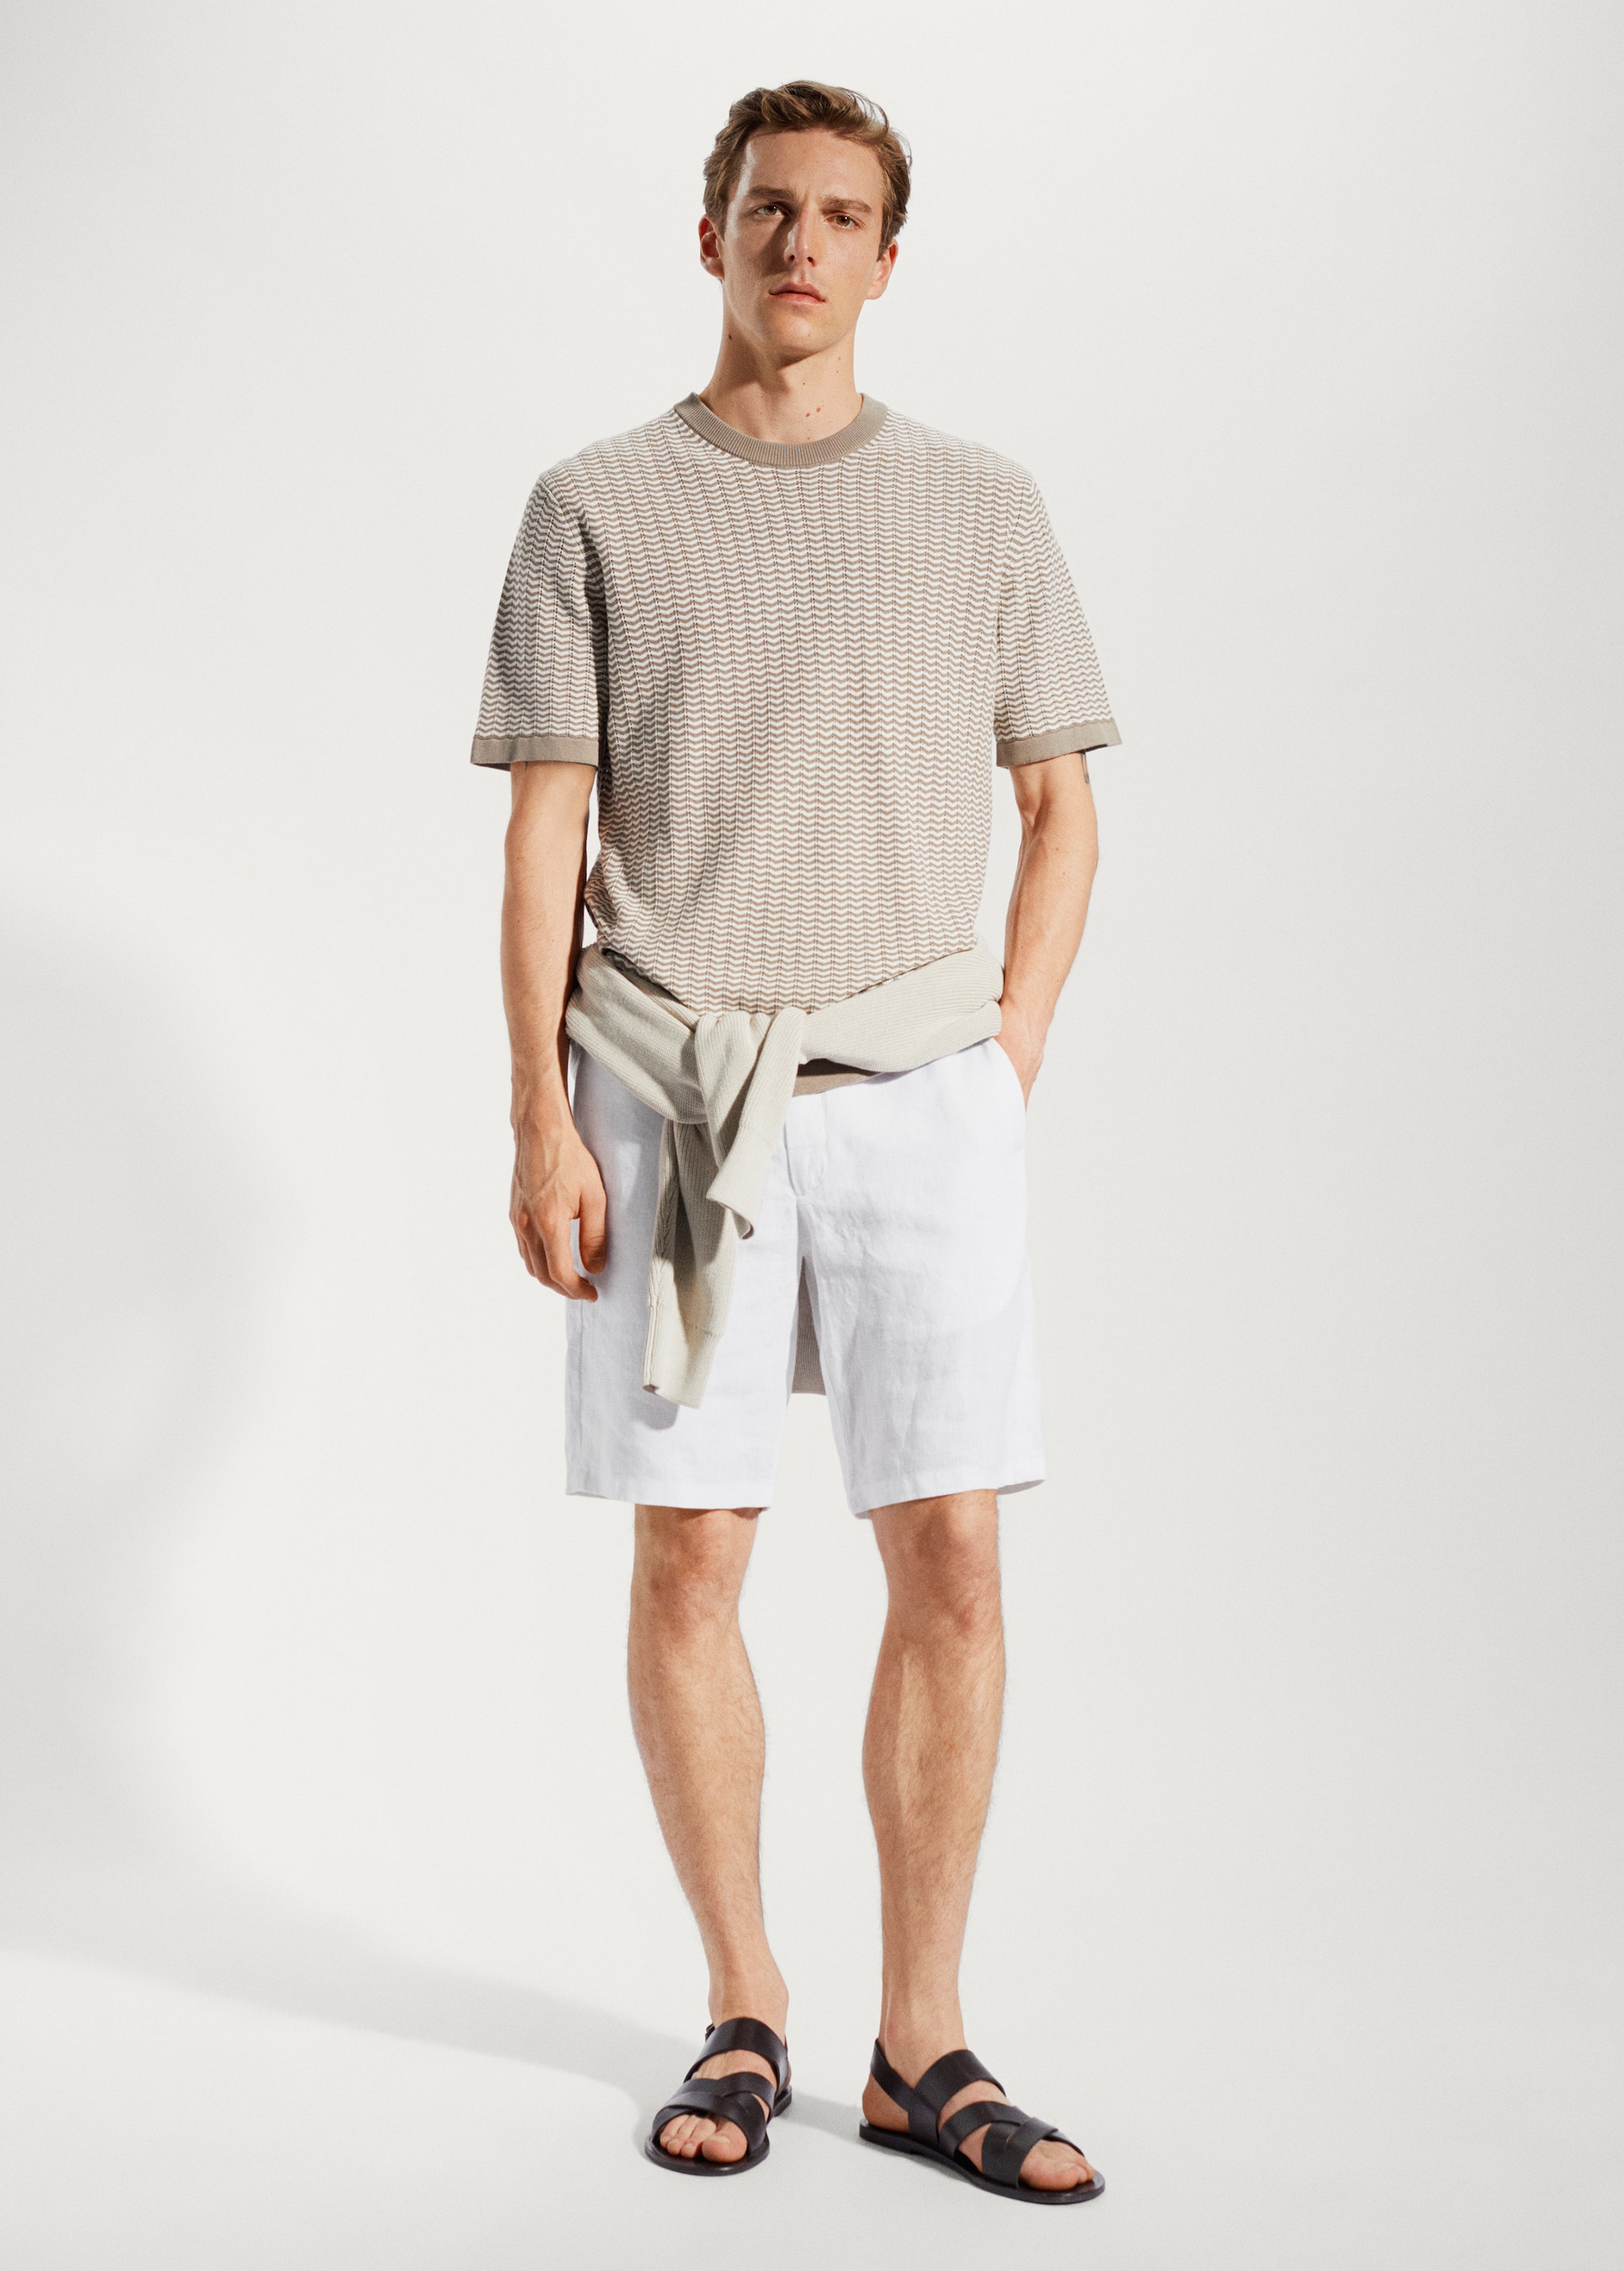 100% linen shorts - General plane